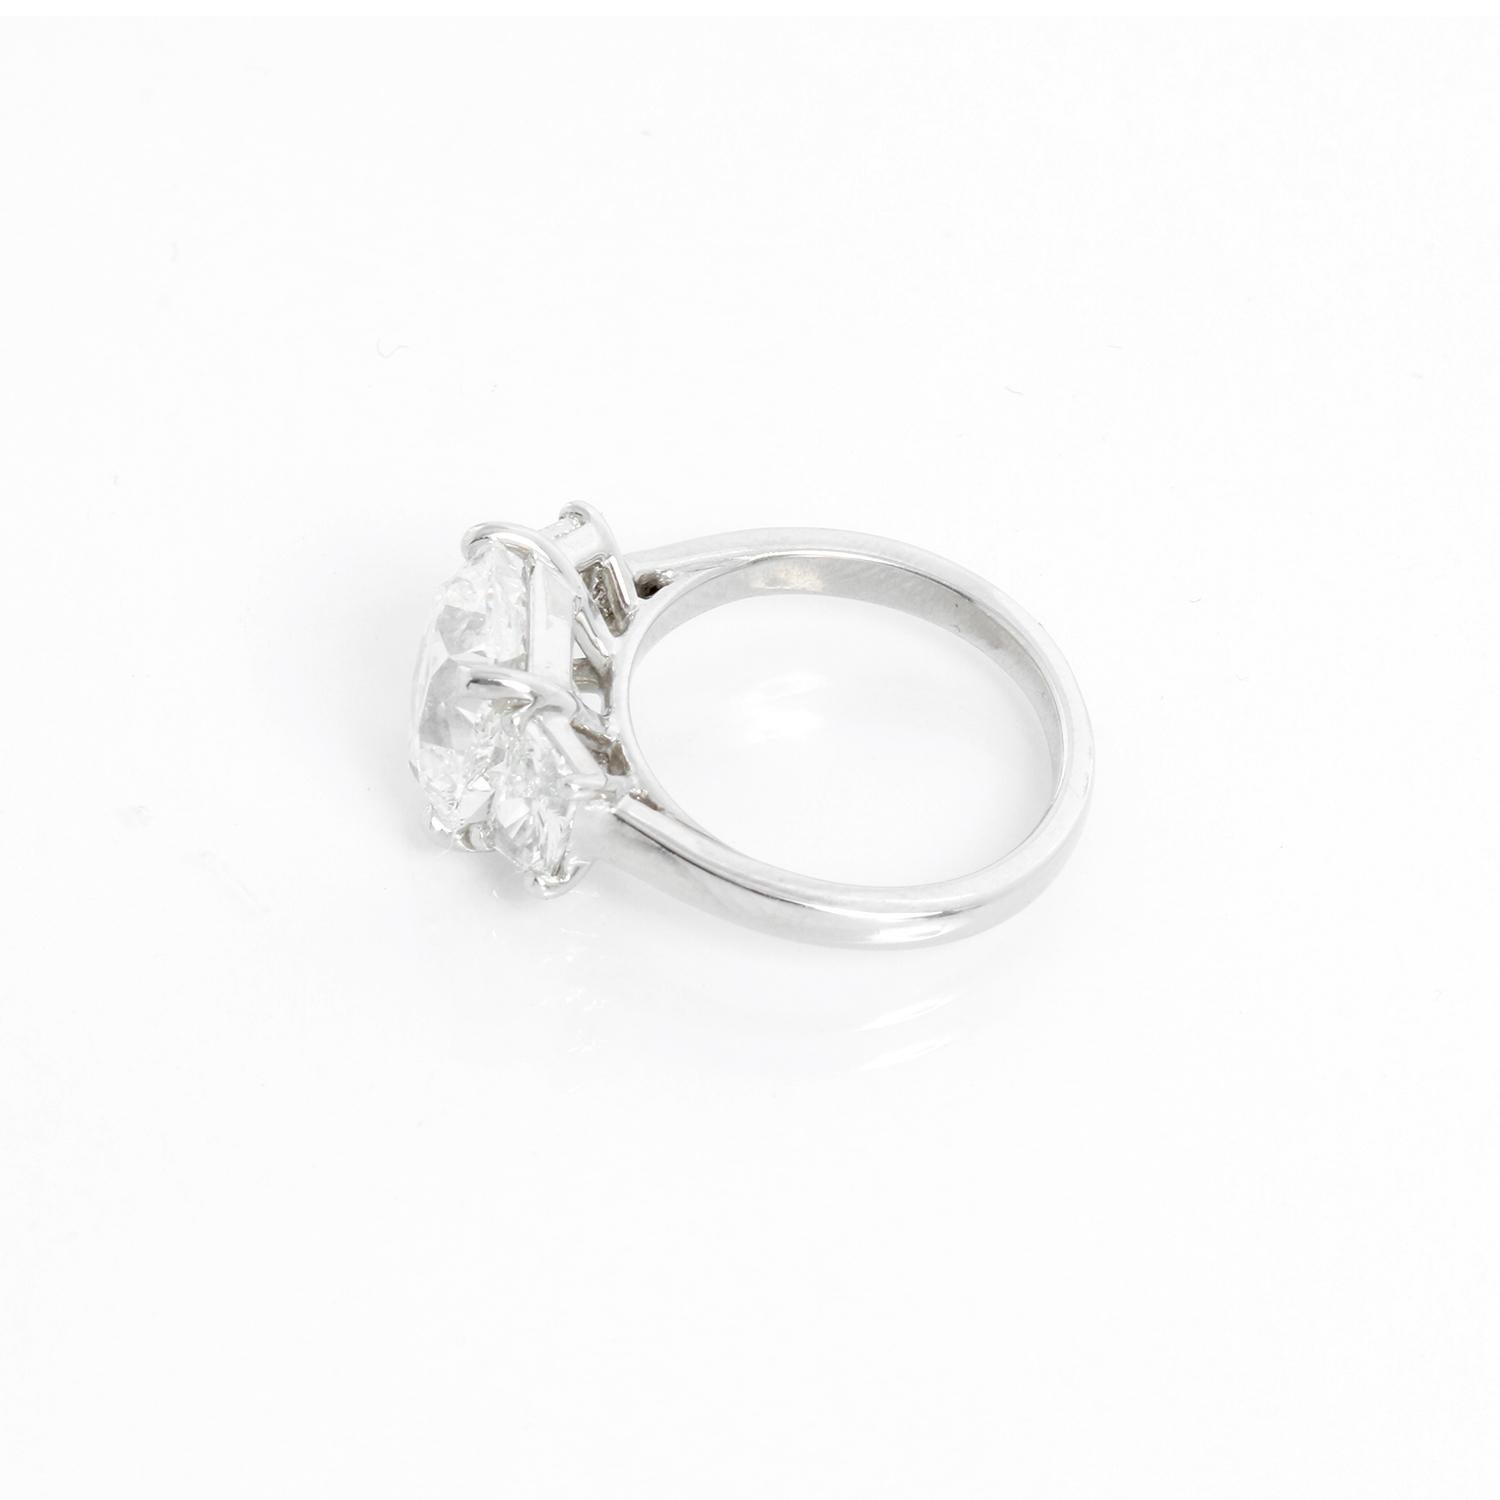 3.24 Carat Cushion Cut Diamond Engagement Ring Size 4.5 For Sale 2